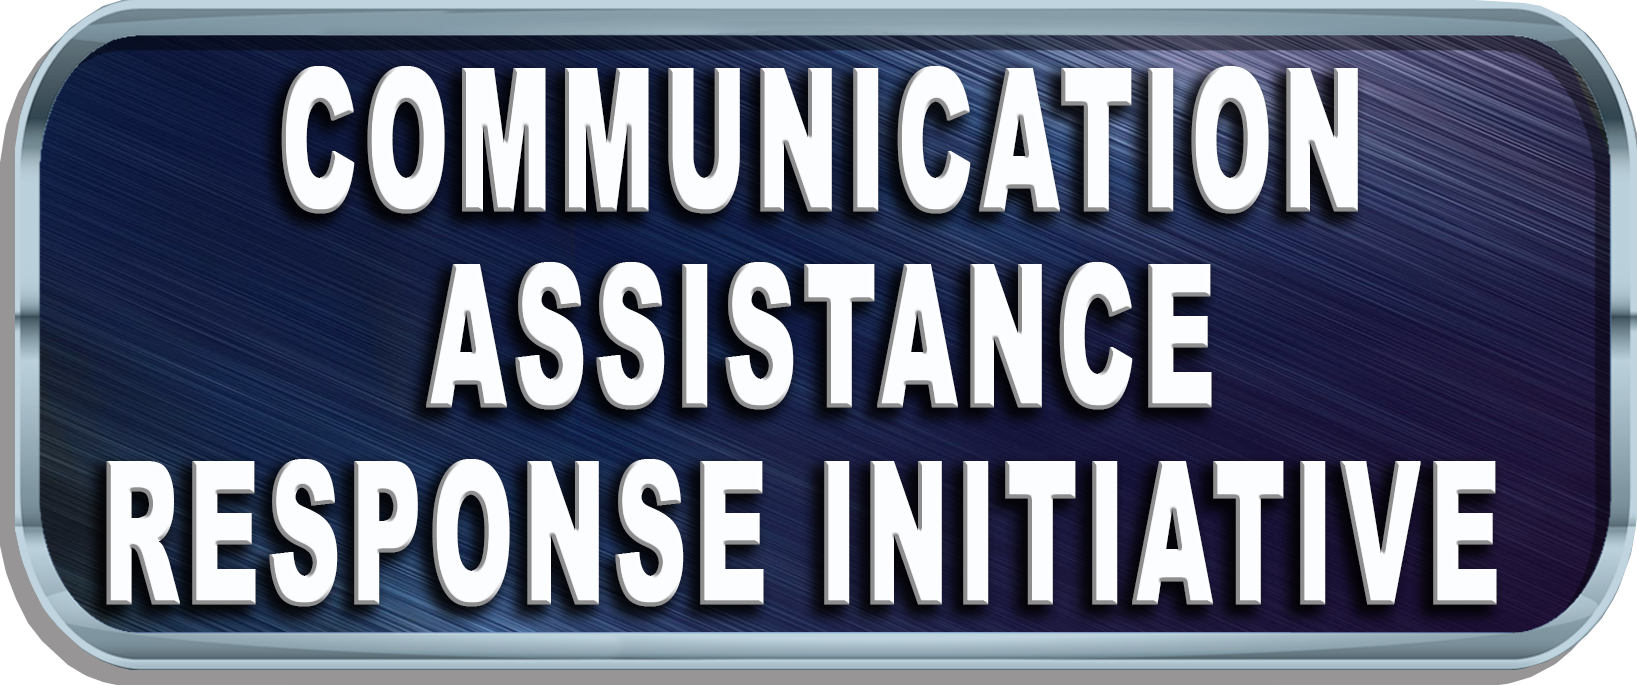 Communication Assistance Response Initiative